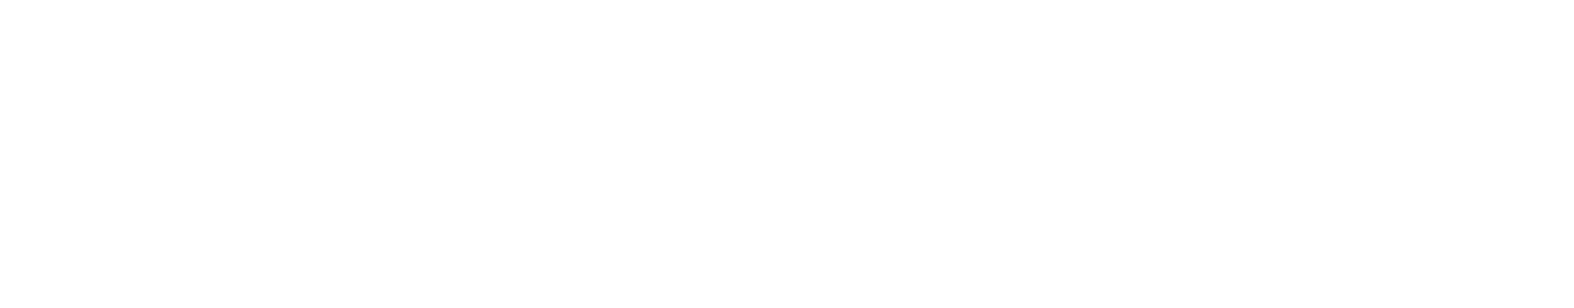 Medfield College Film Society